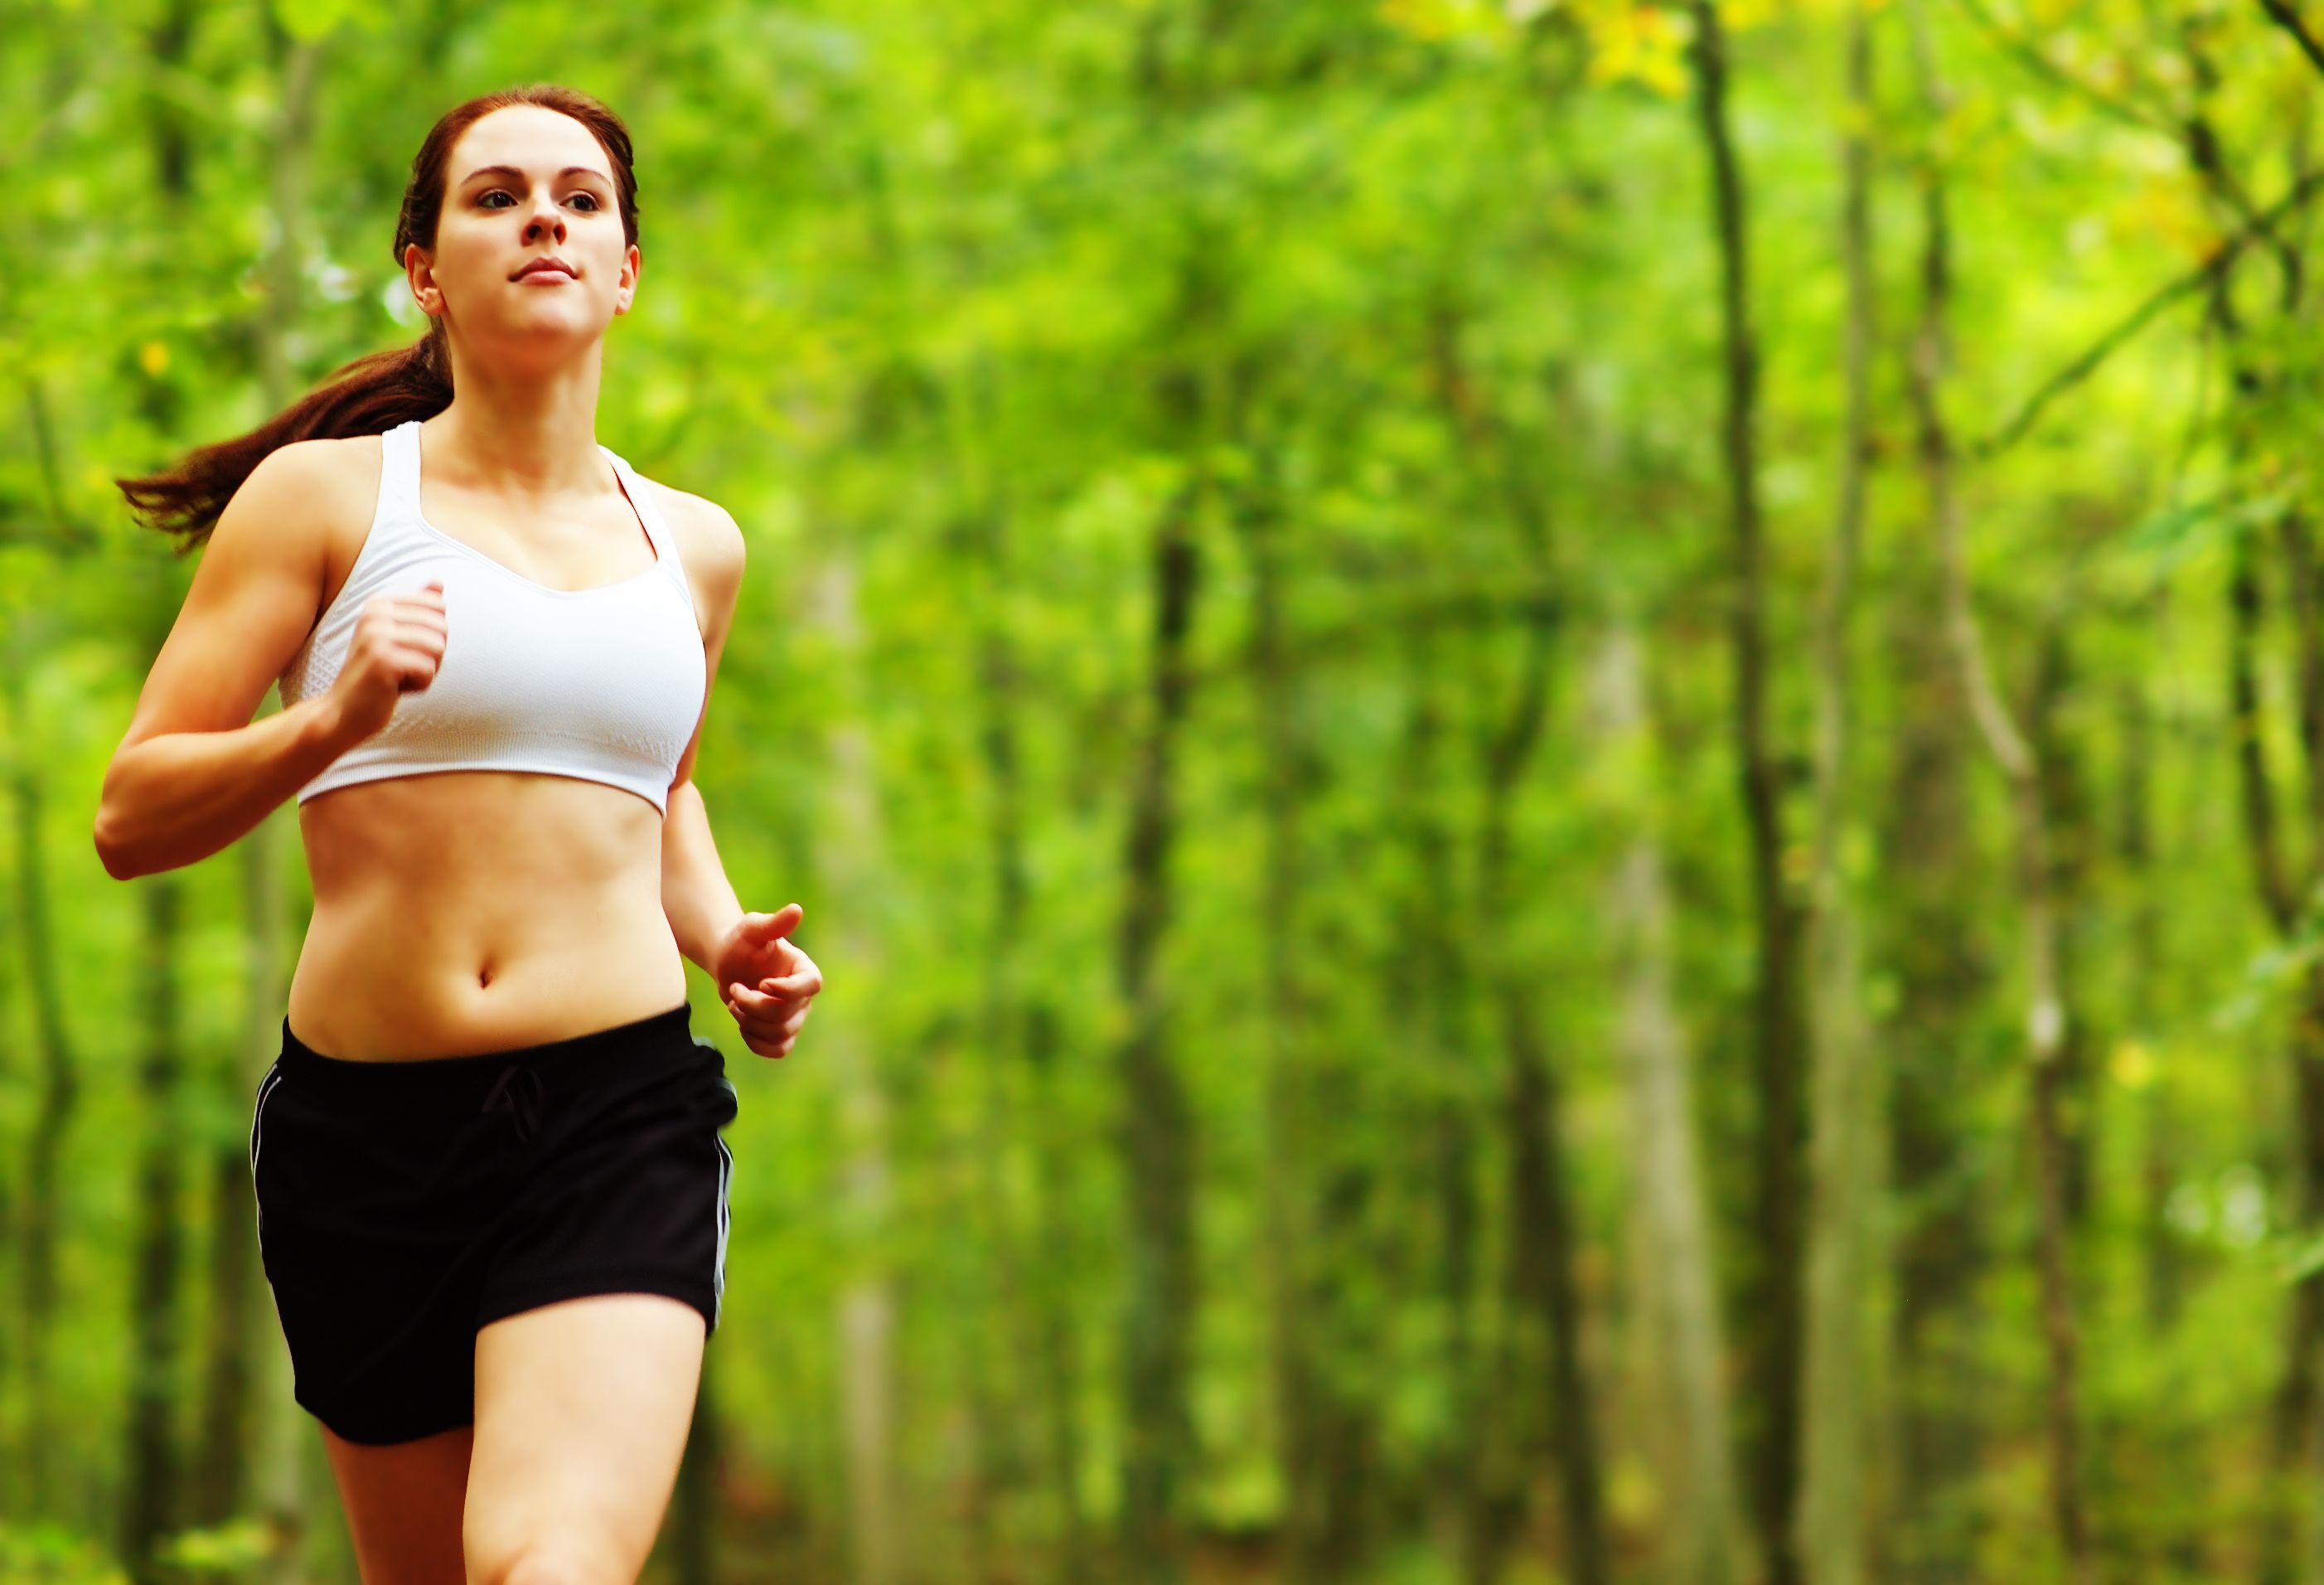 Баб сбежал. Утренняя пробежка. Девушка бежит. Женщина на пробежке. Занятие спортом на природе.